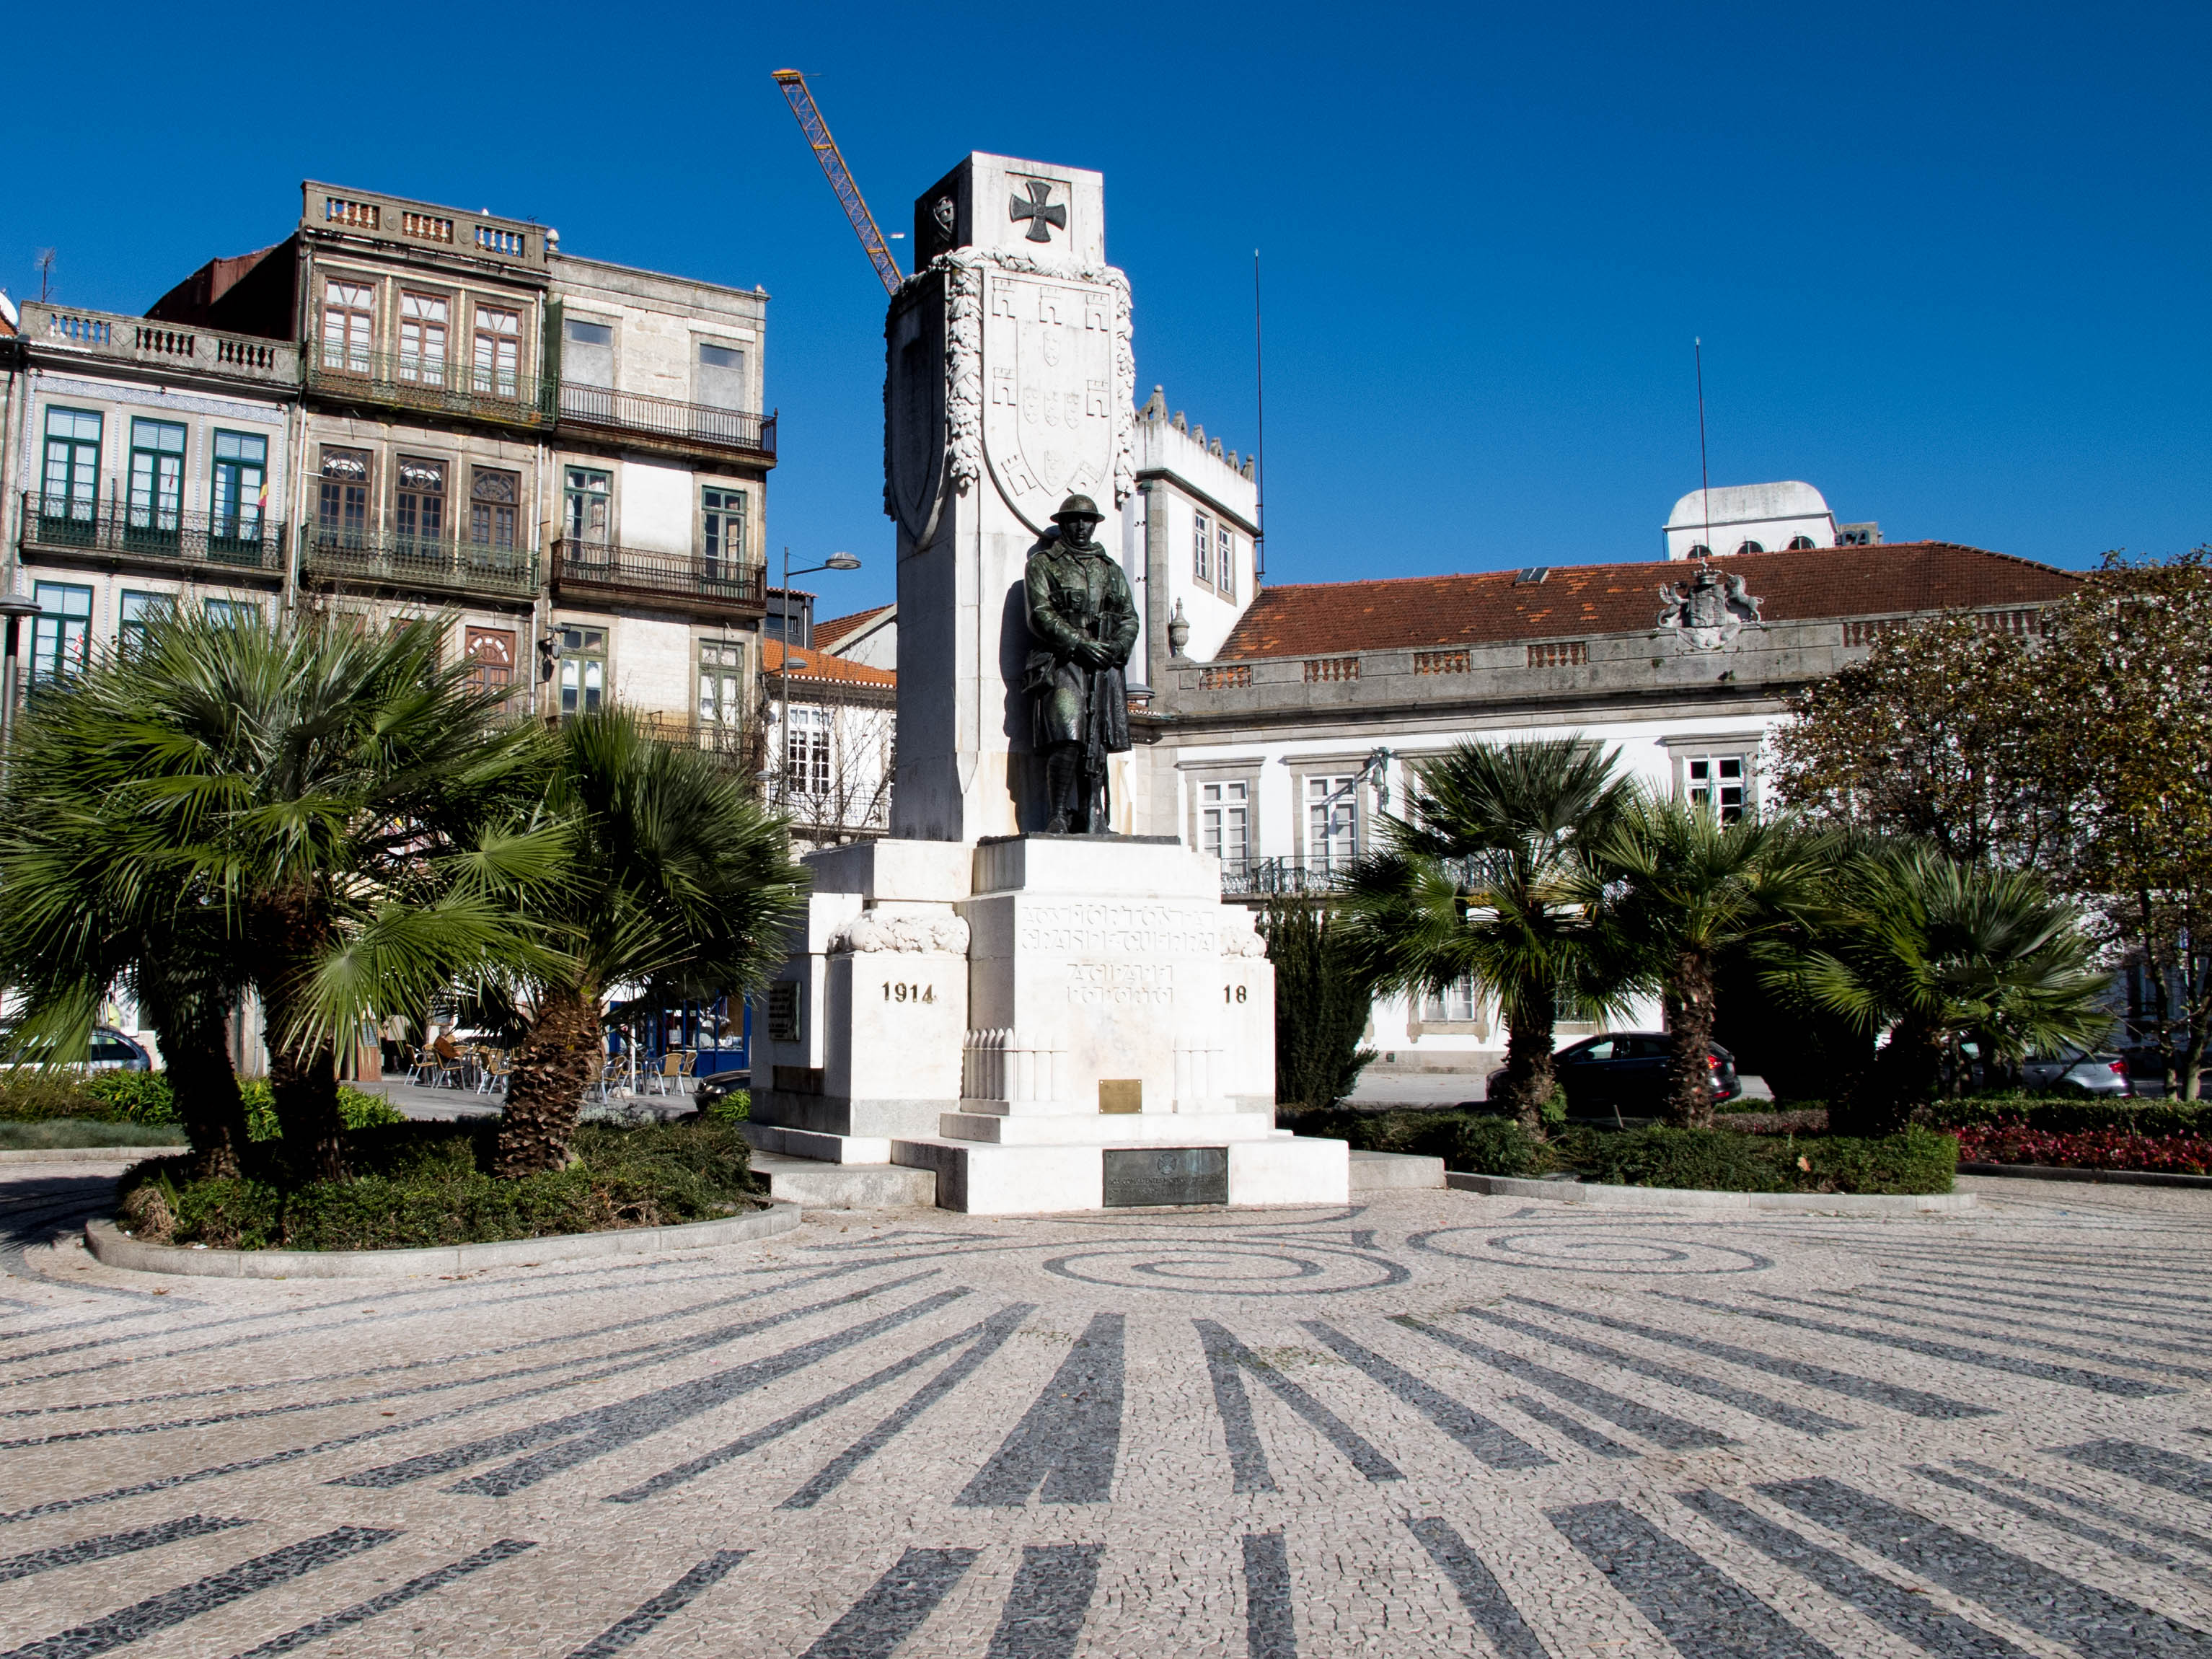 The statue at the Center of Carlos Alberto Square, represents the "unkown soldier"